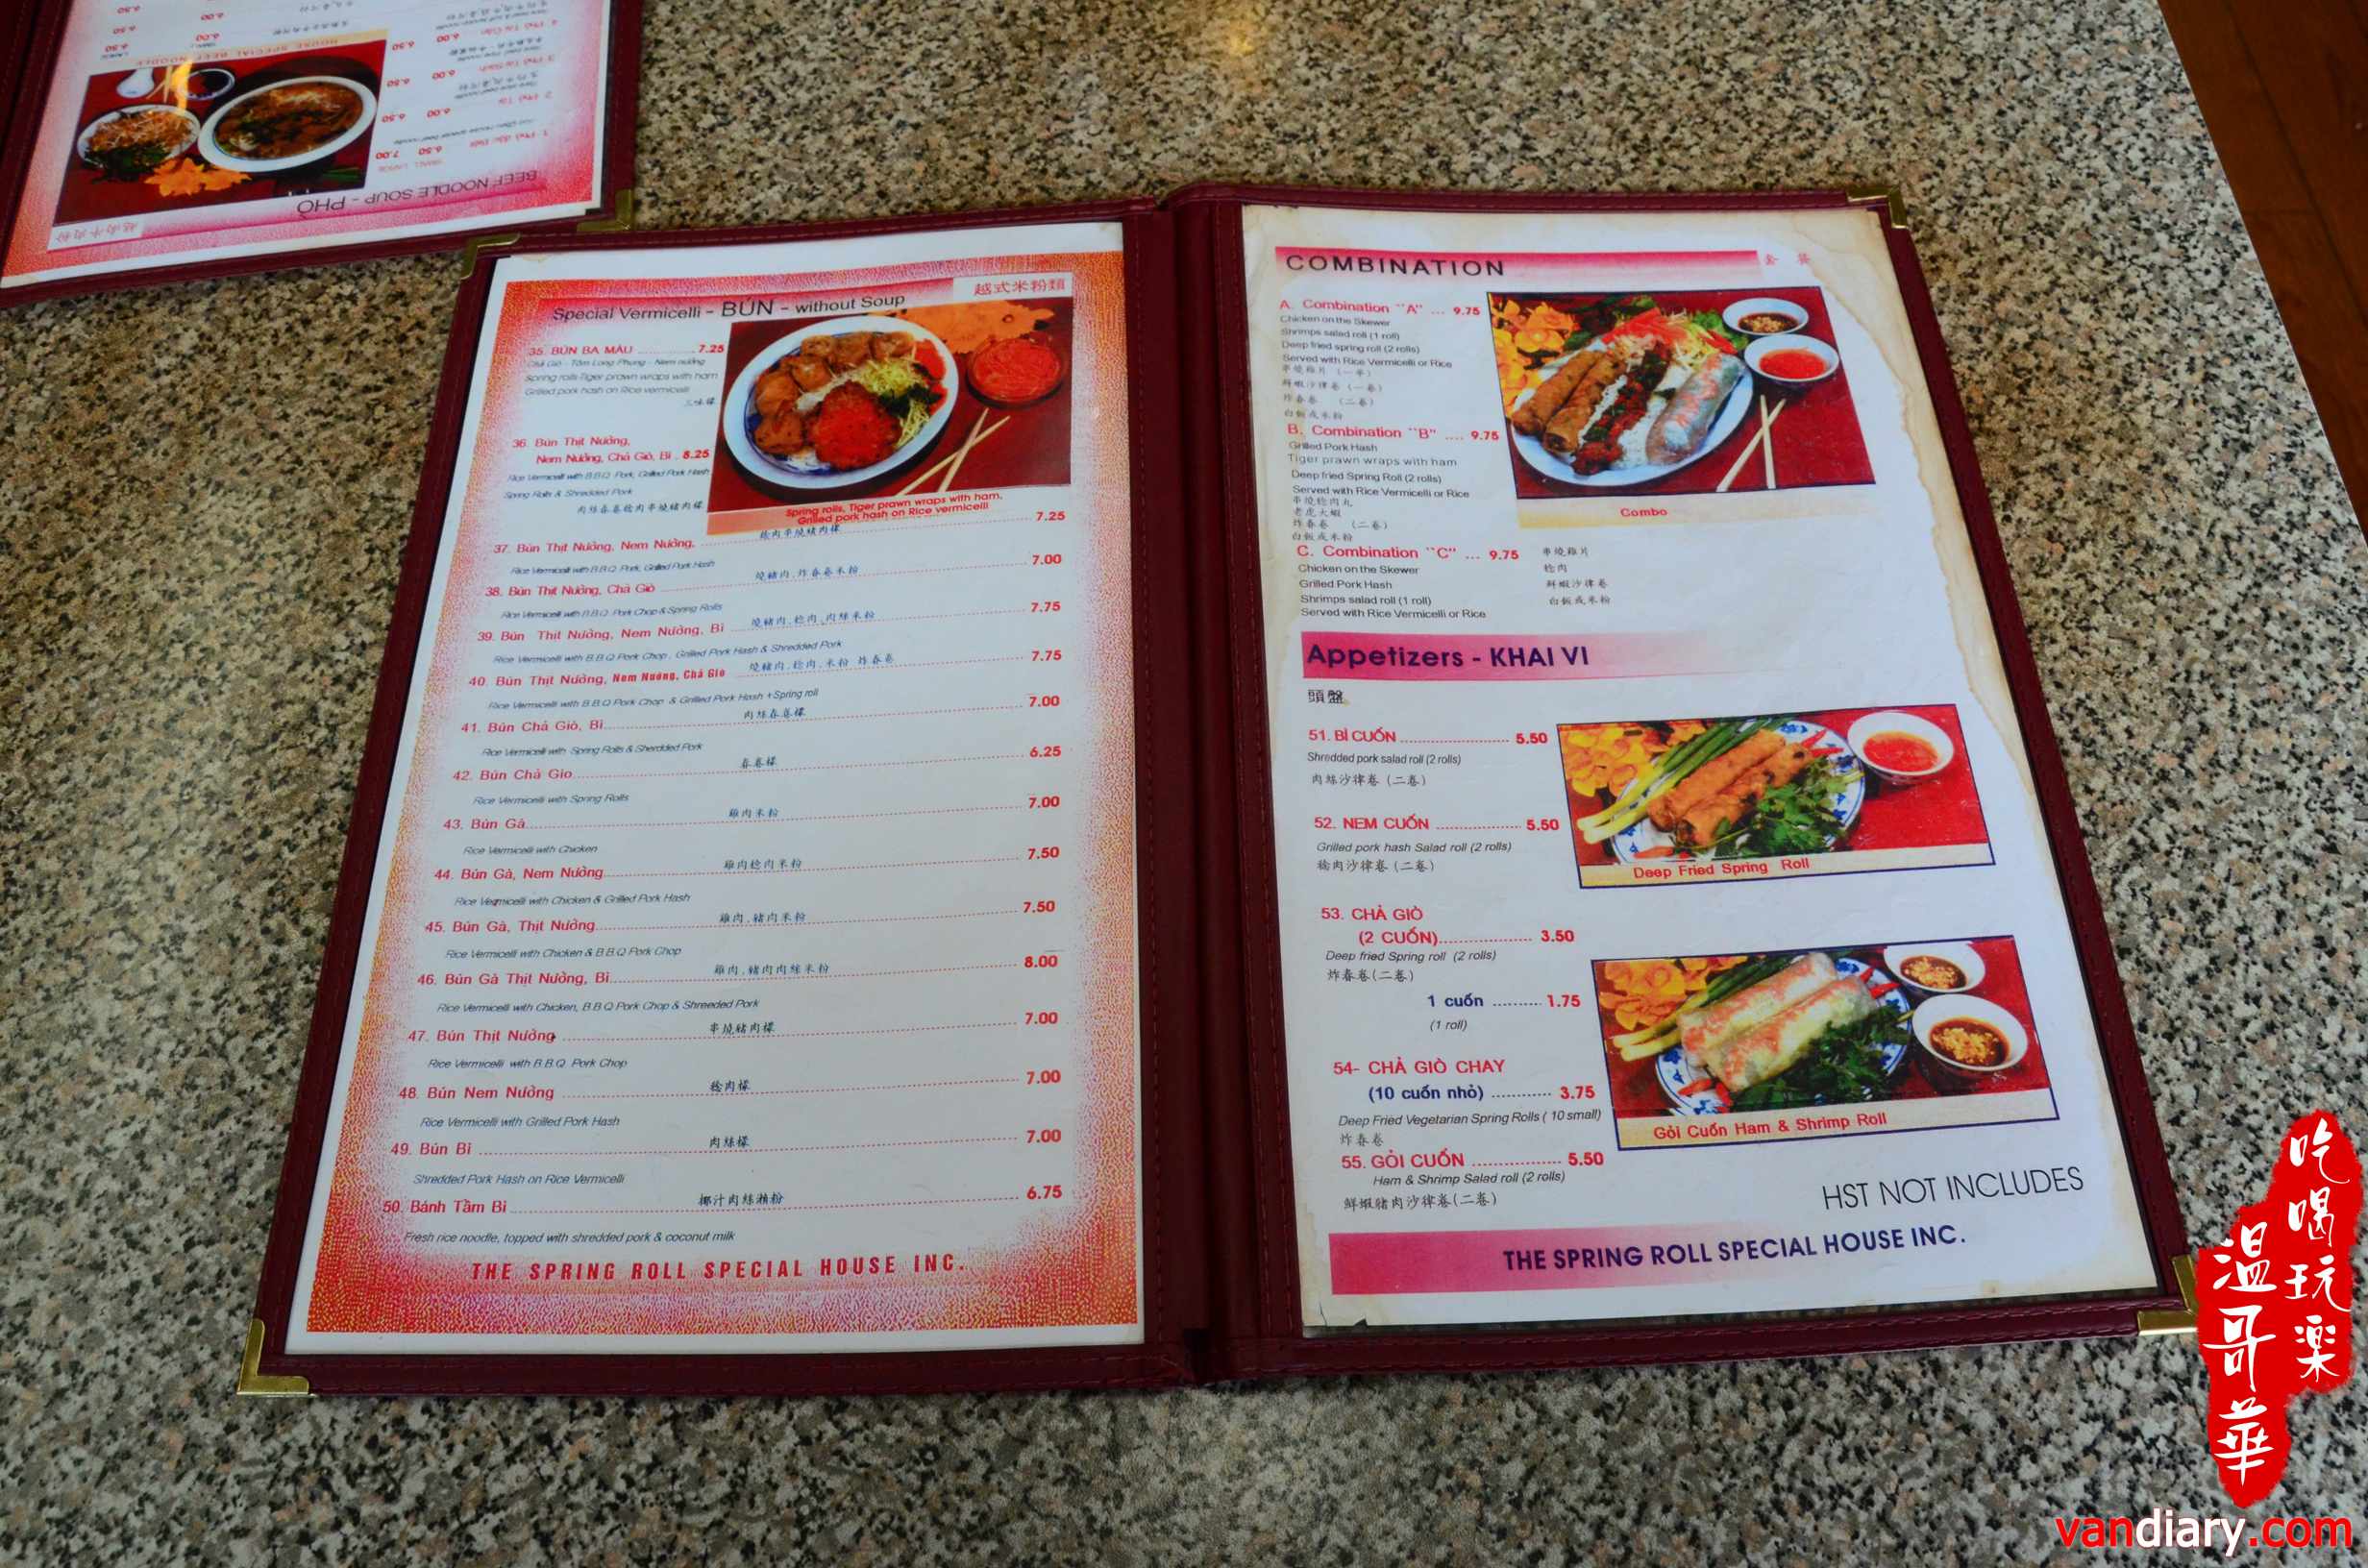 Bao Chau Vietnamese Restaurant - East Hastings Street